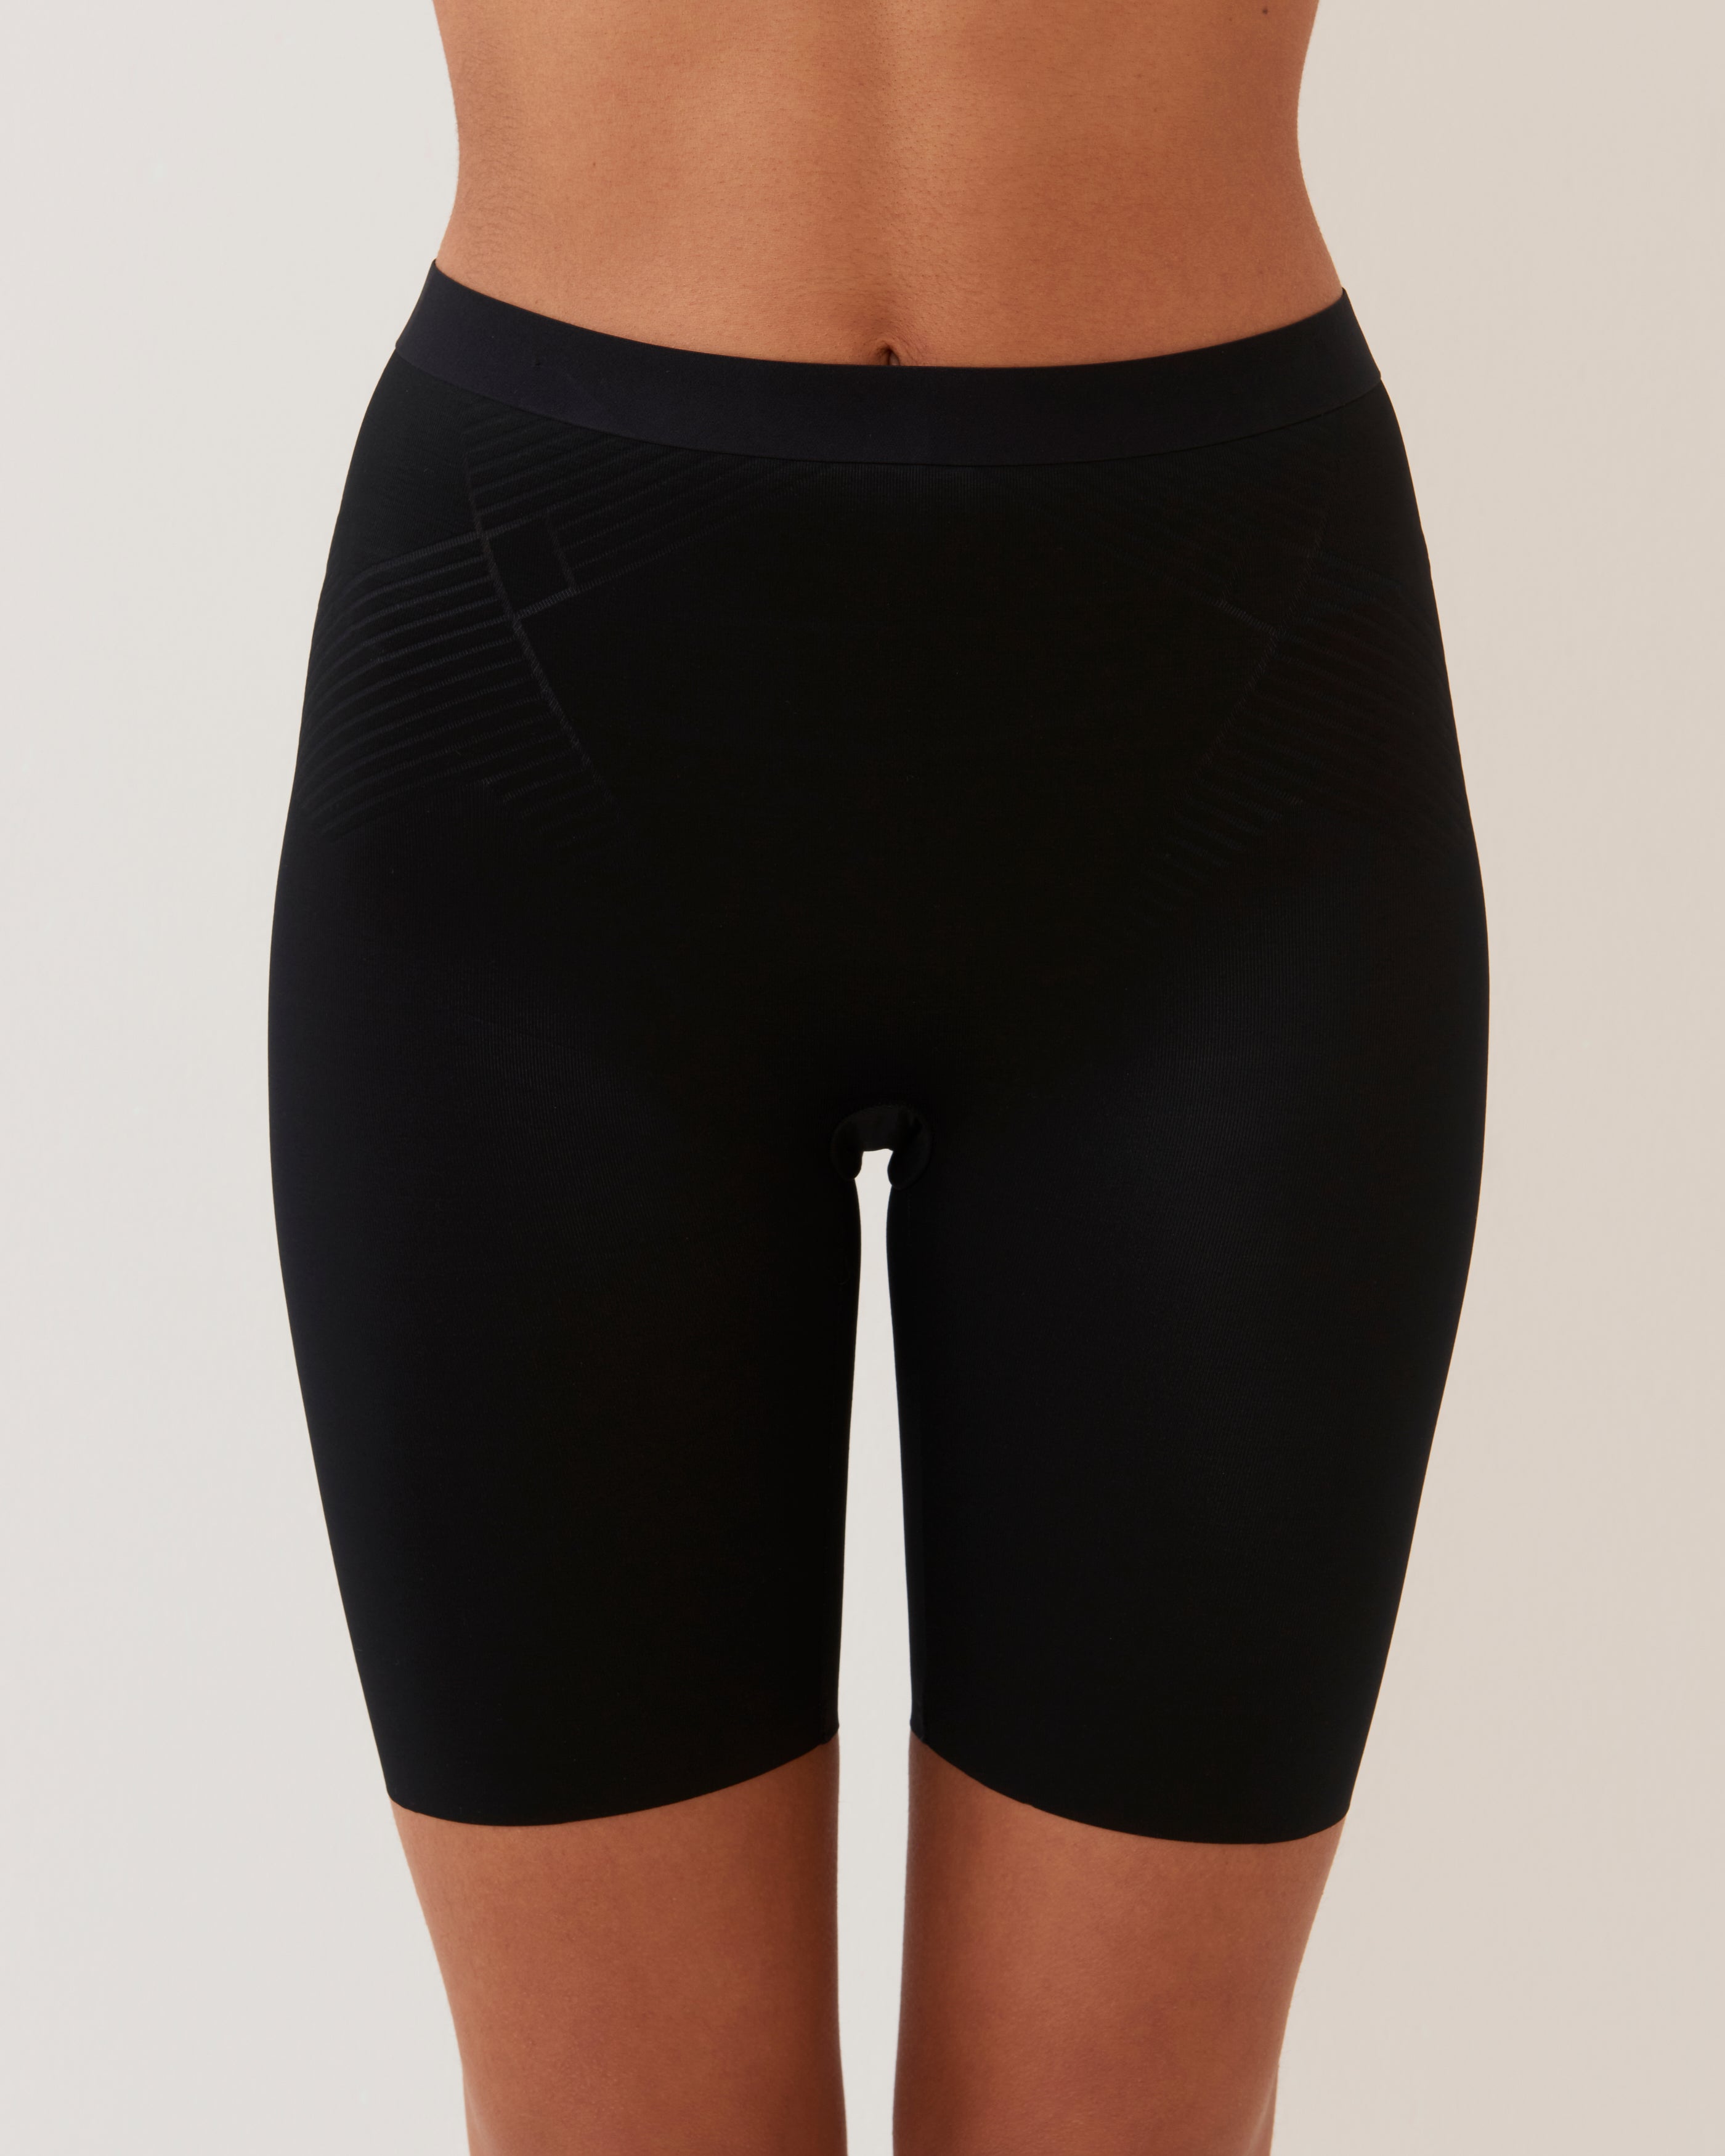 Black Slimming Shorts by SPANX